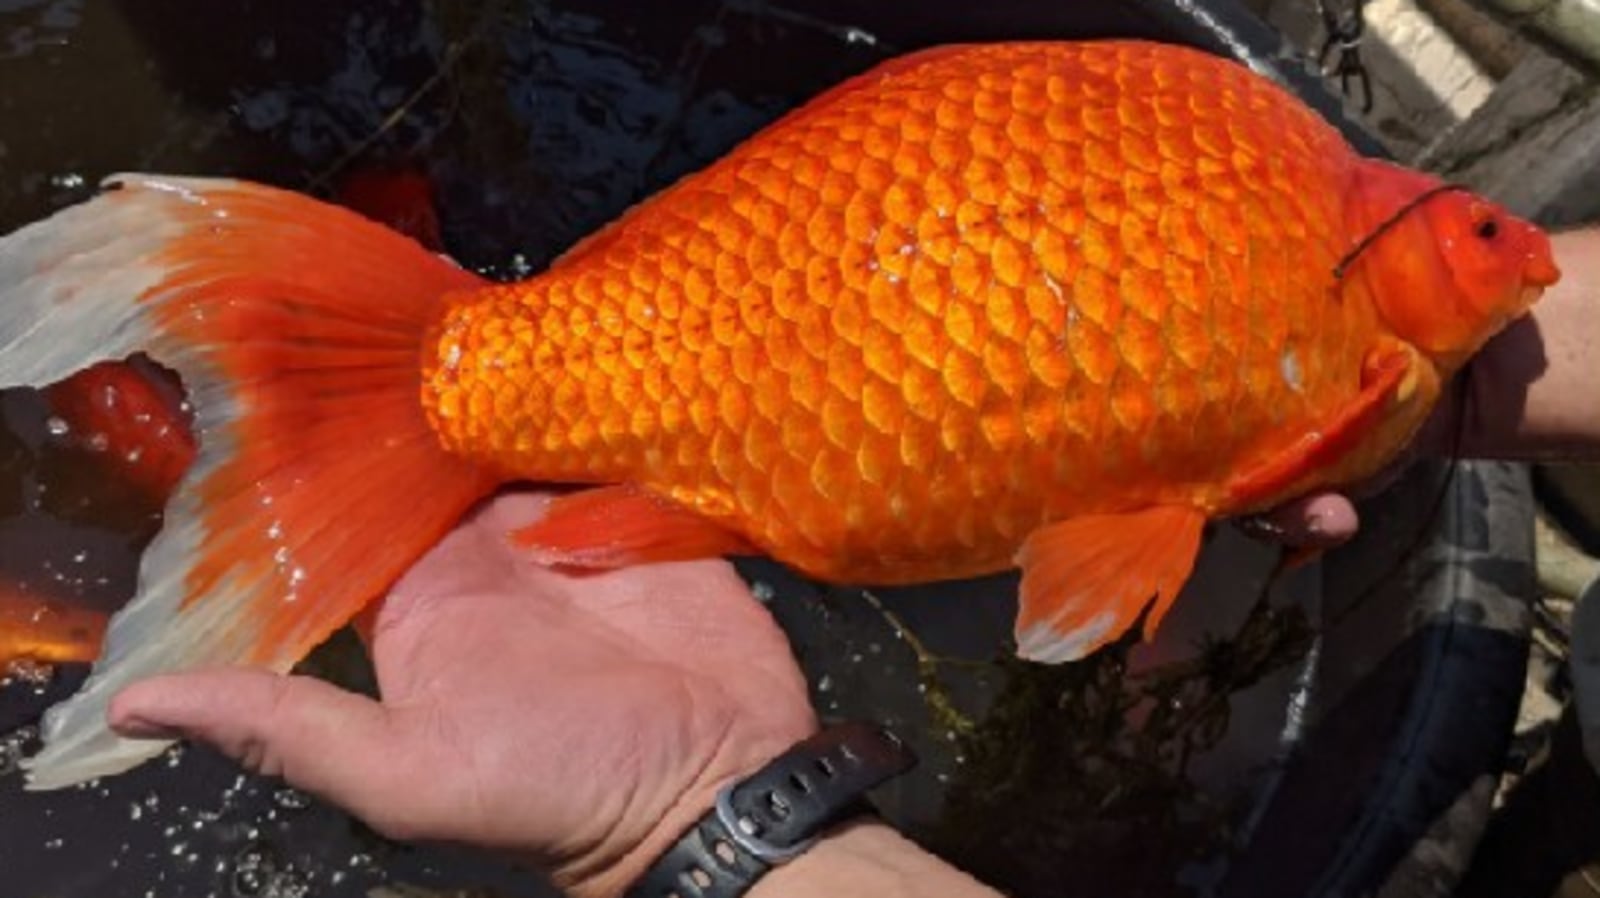 Gigantic gold fish crowd Minnesota lake, city issues advisory | Trending